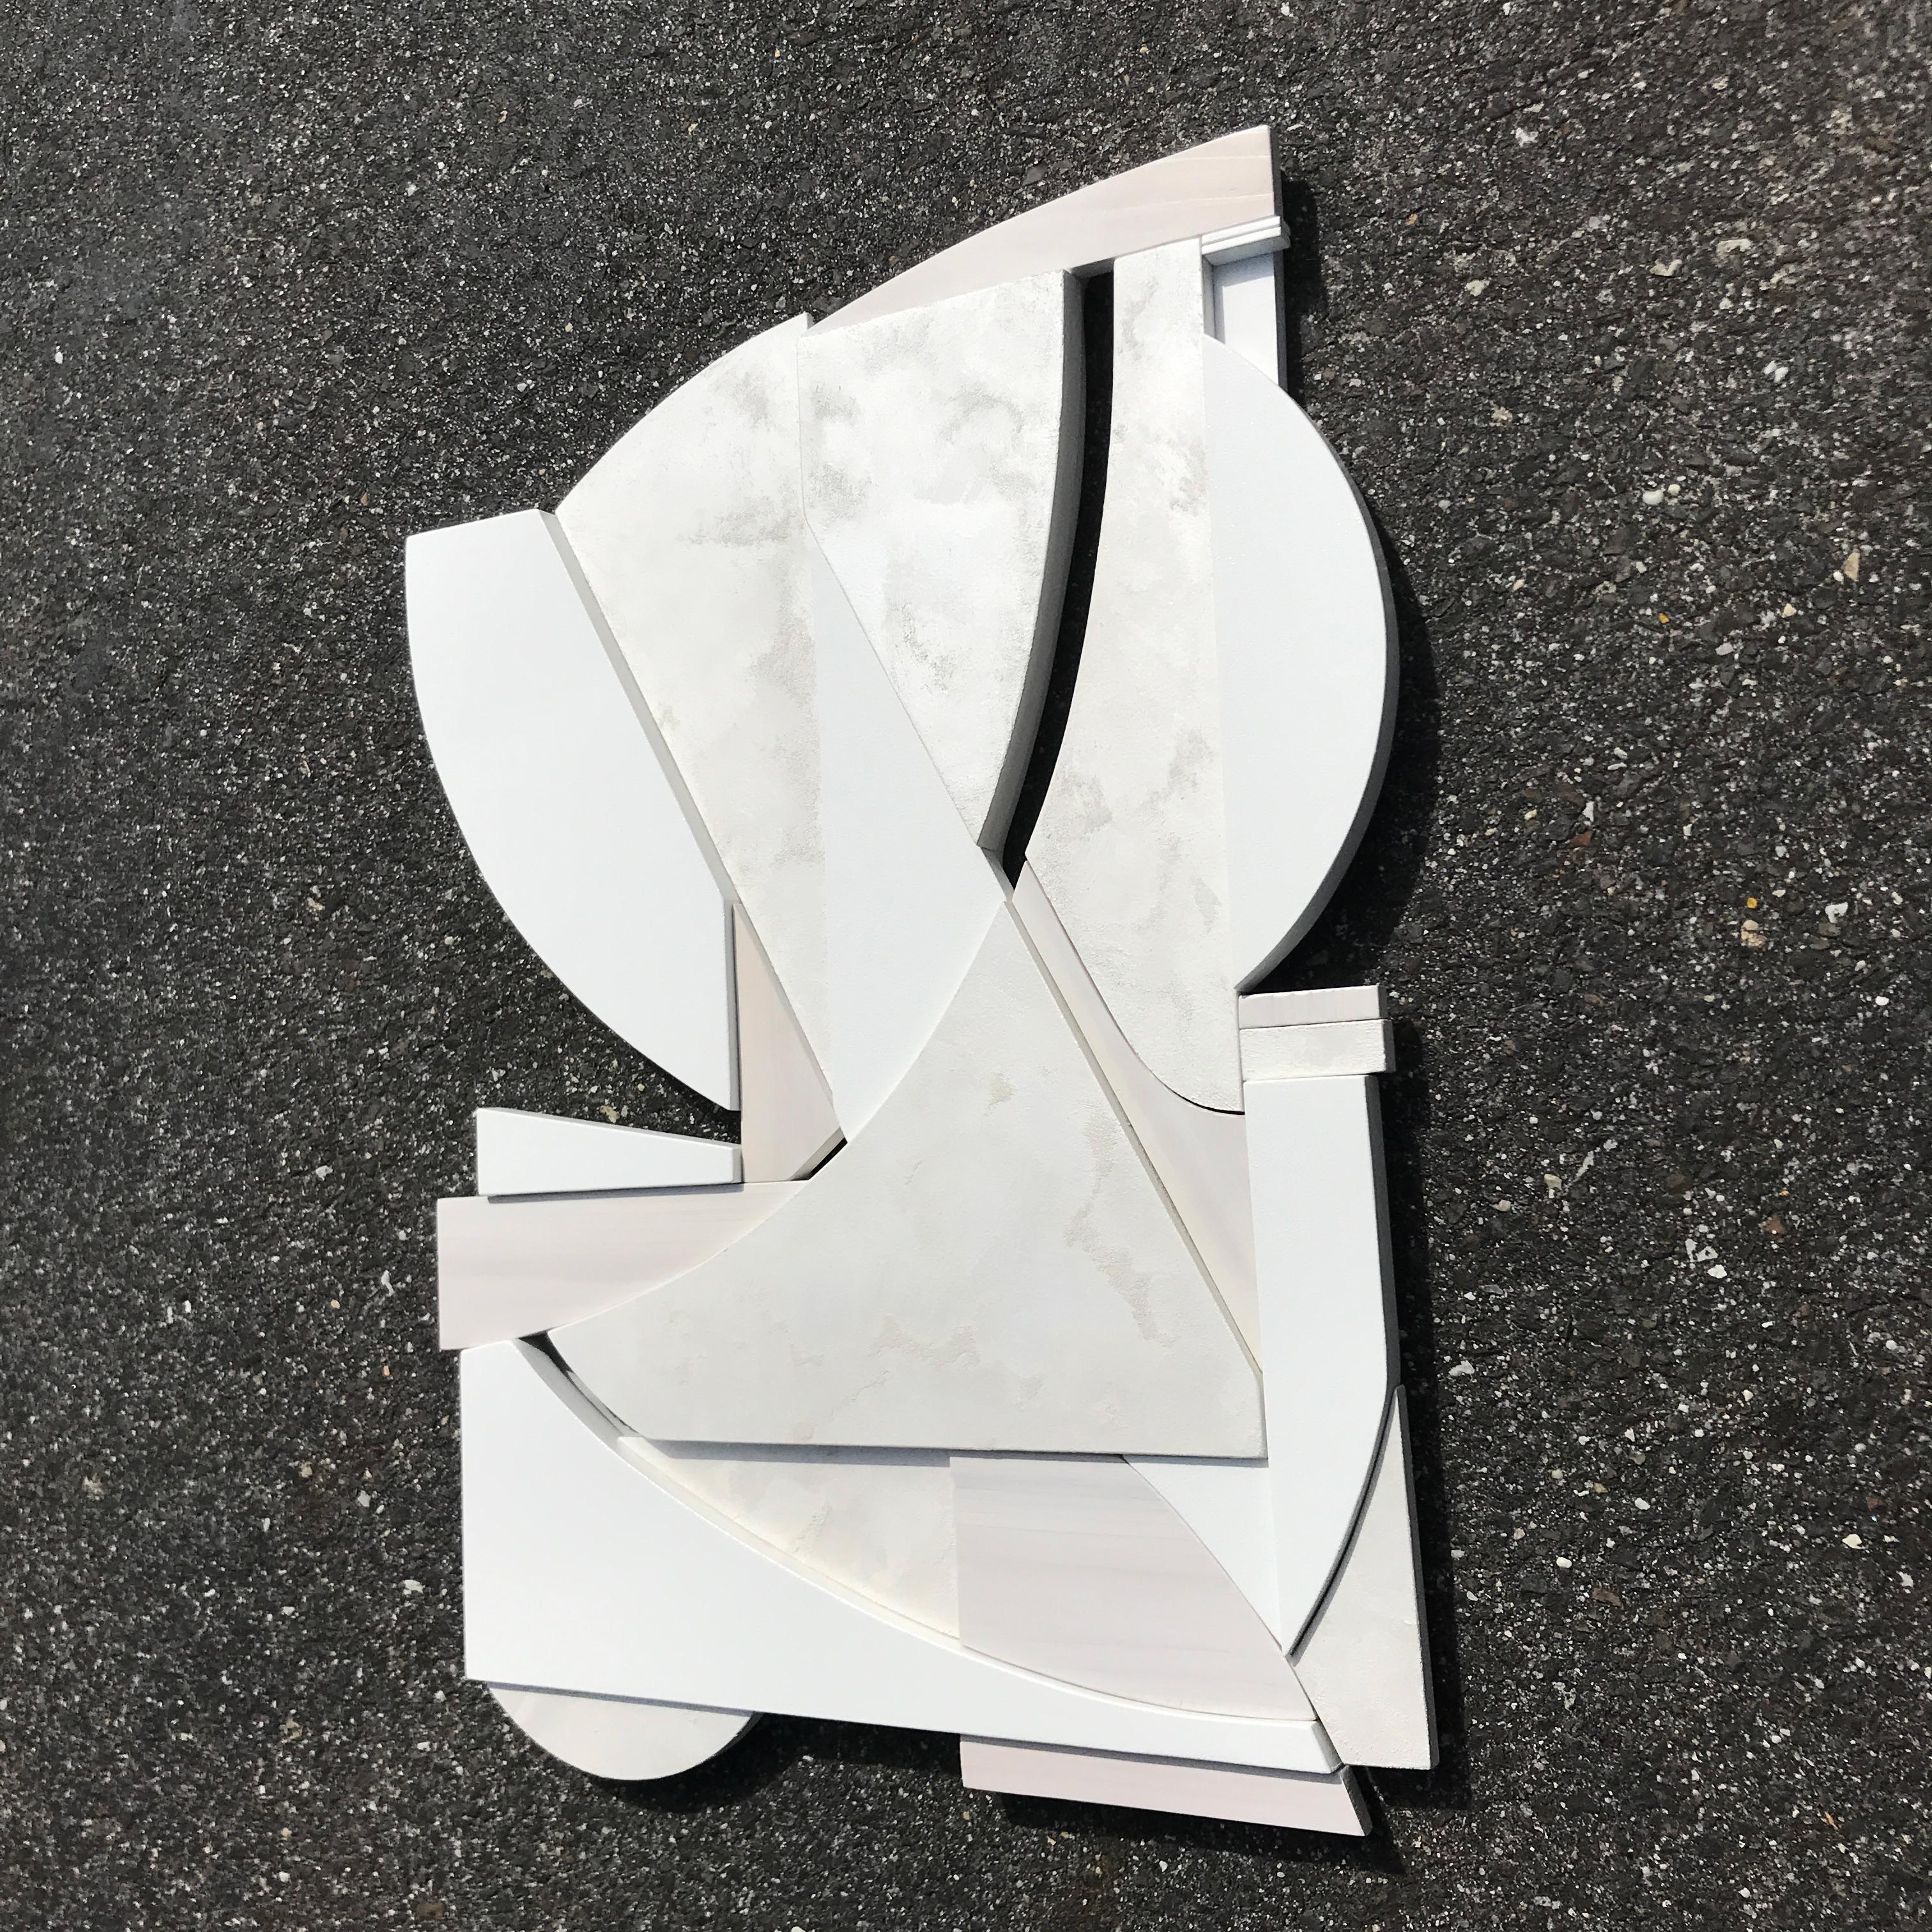 Blanco (modern art deco abstract wall sculpture geometric white monochrome cubic 3